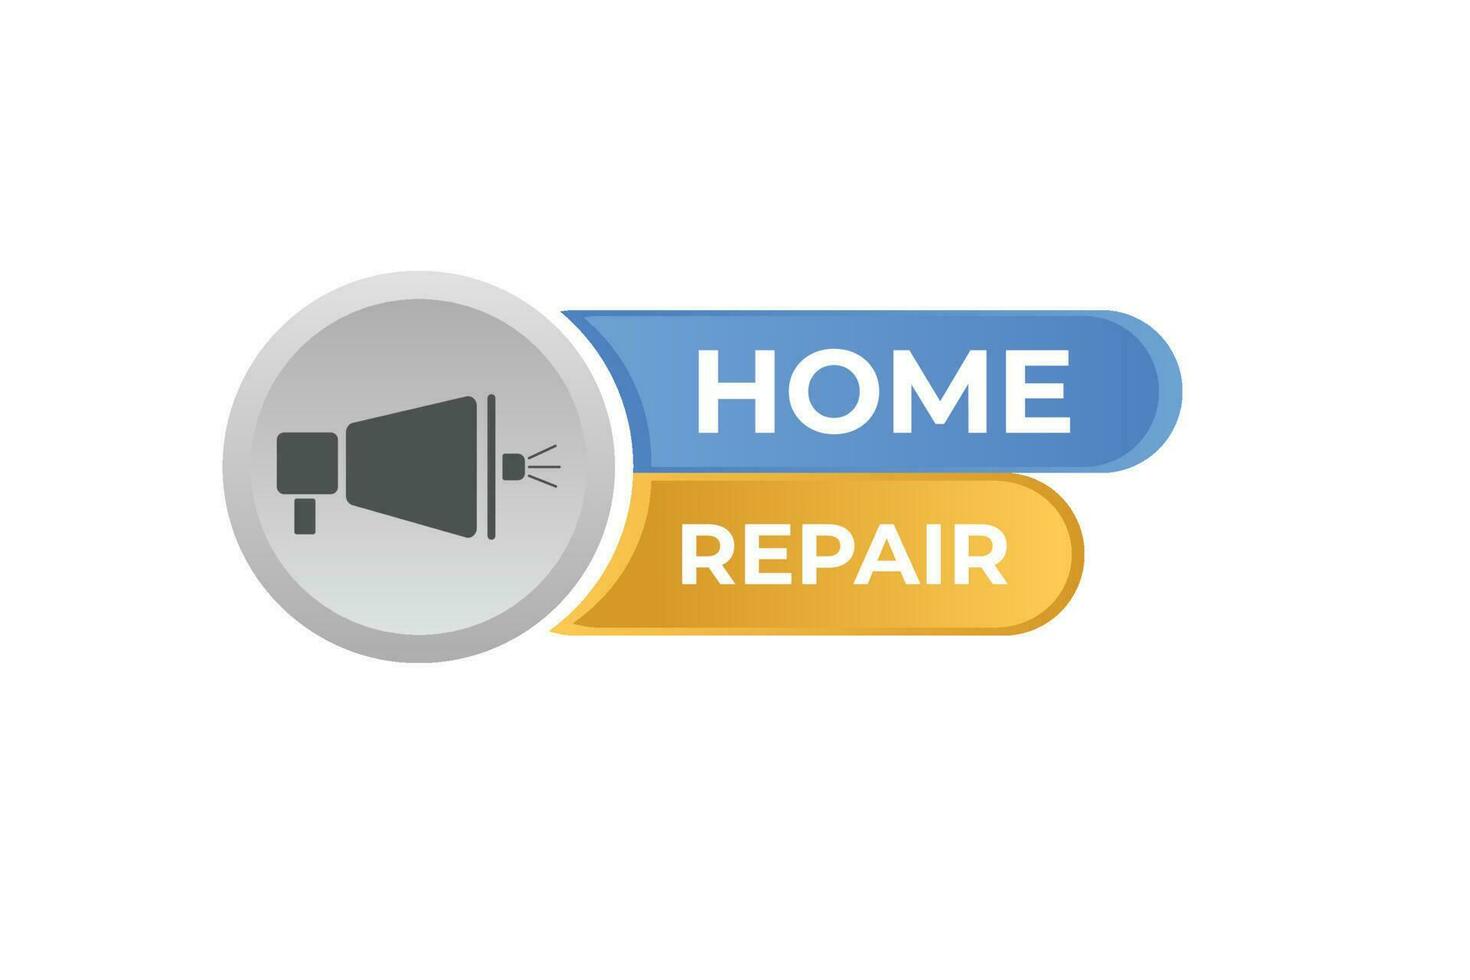 Home Repair Button. Speech Bubble, Banner Label Home Repair vector